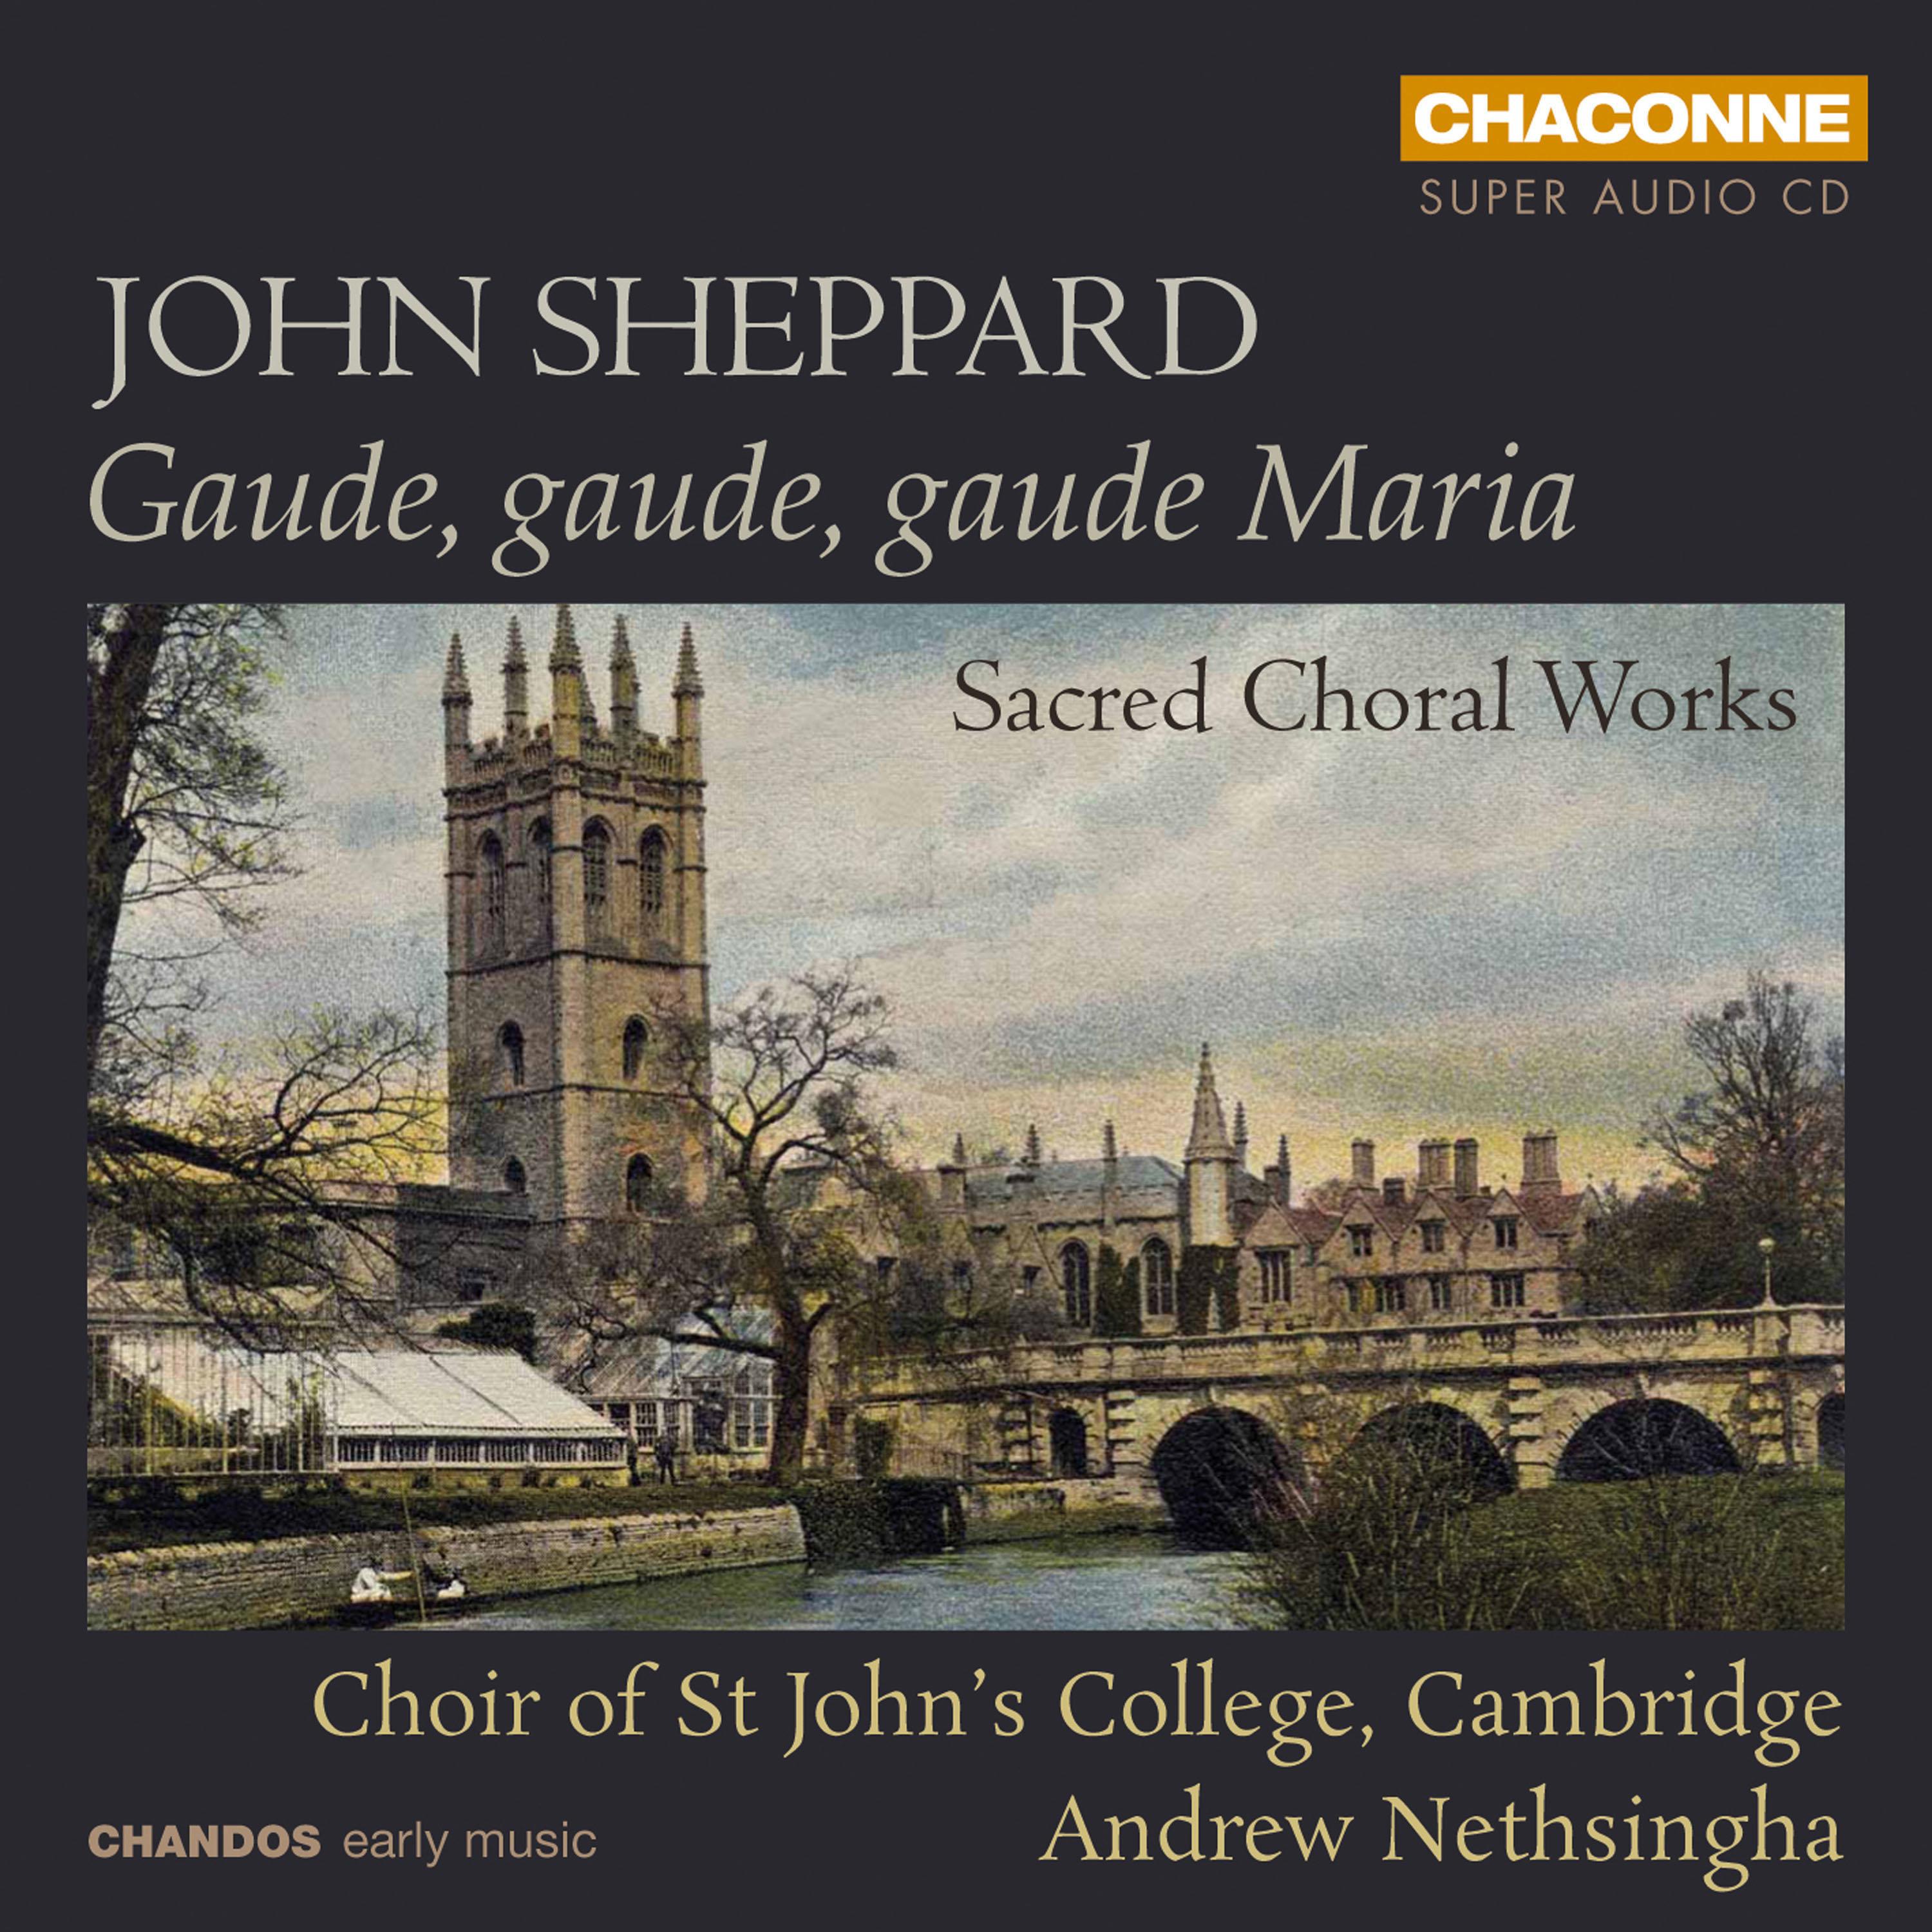 Choir of St John’s College - Christ rising again